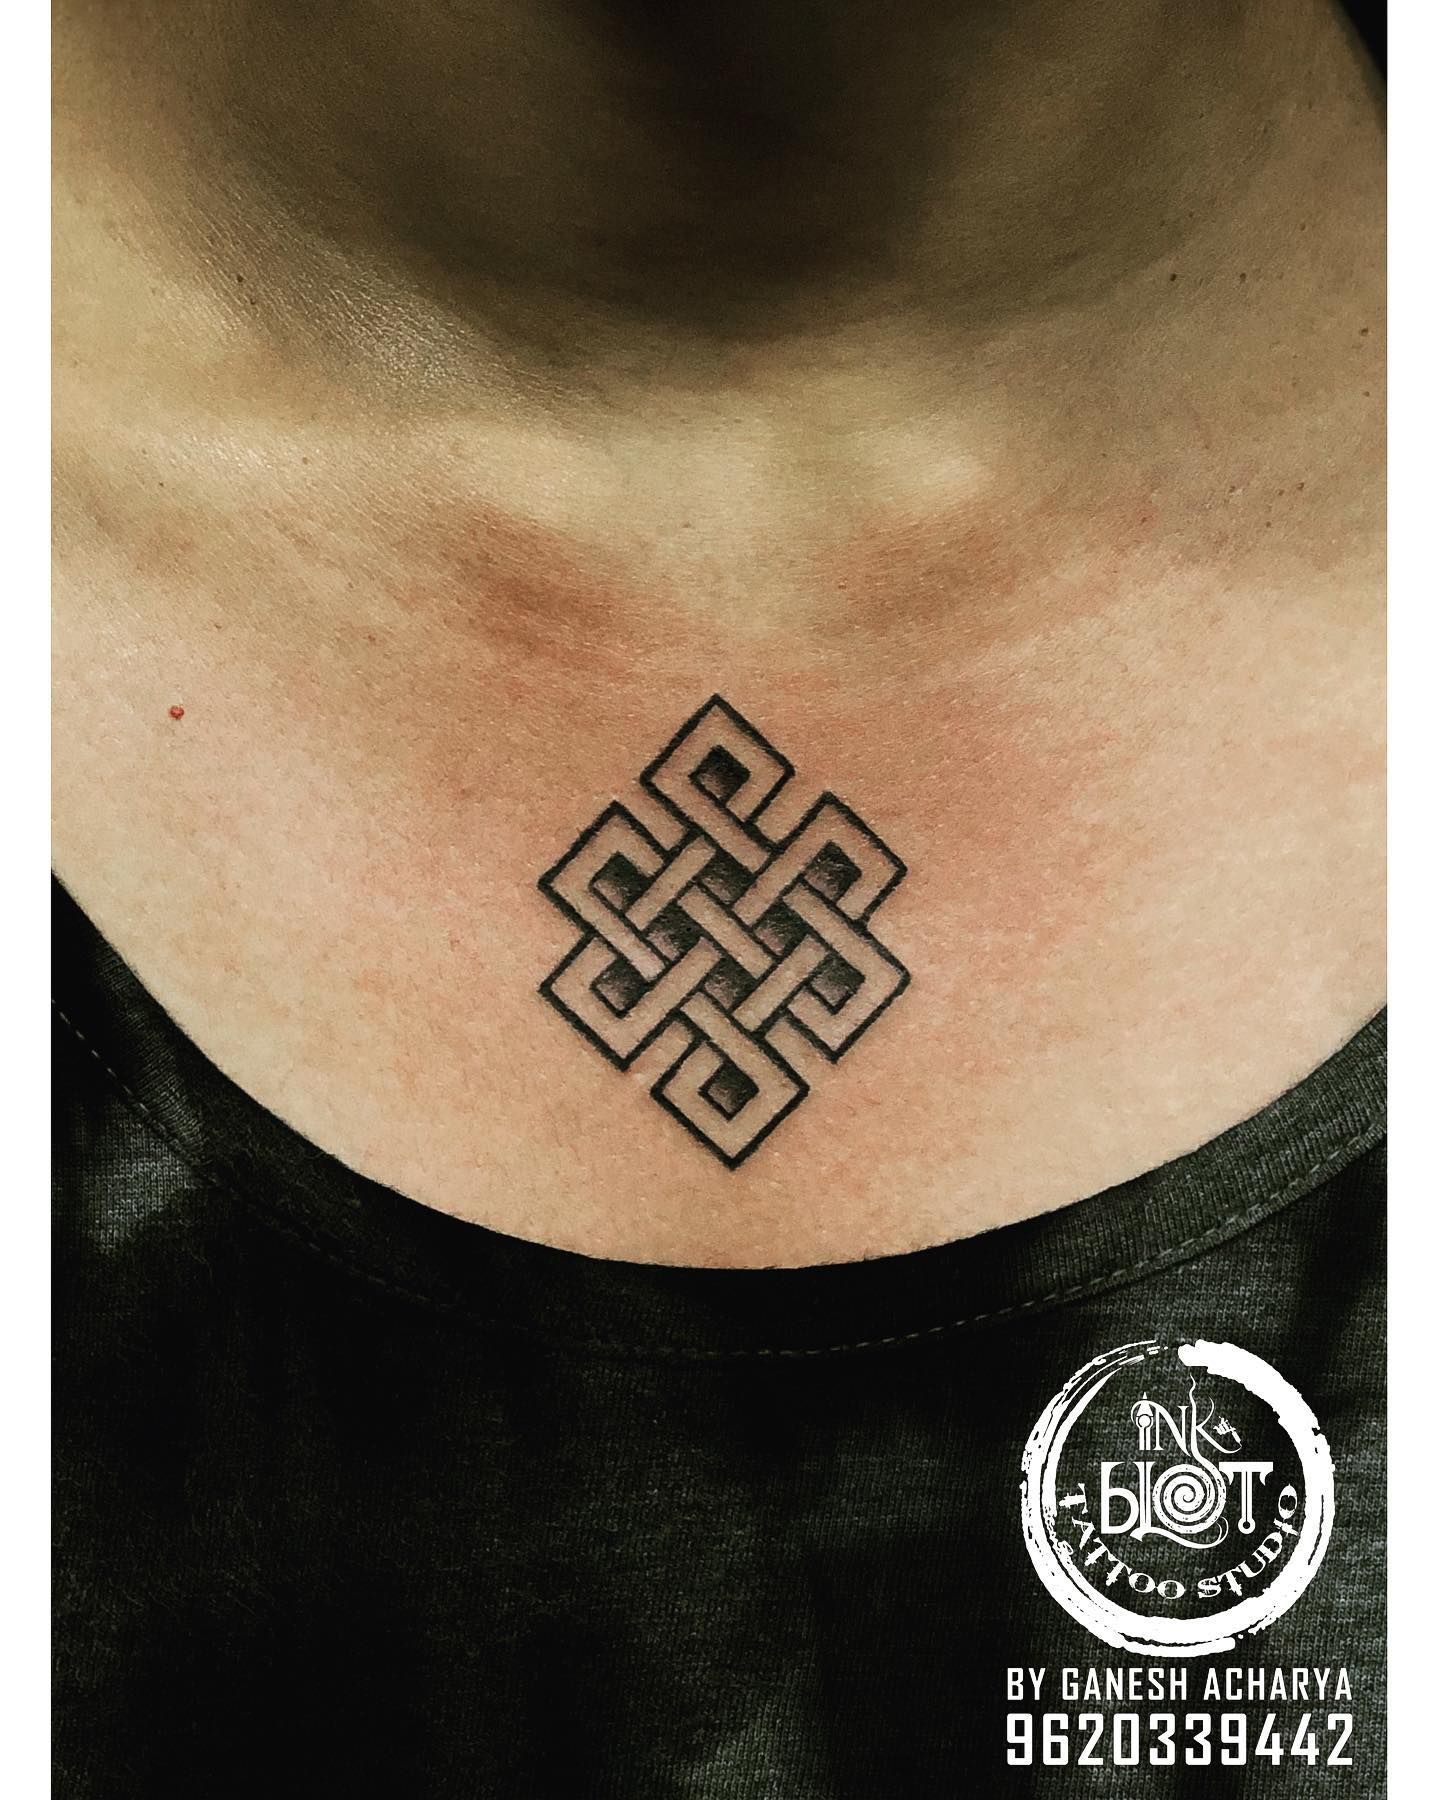 armband tattoo in Maori and Polynesian by Samarveera2008 on DeviantArt